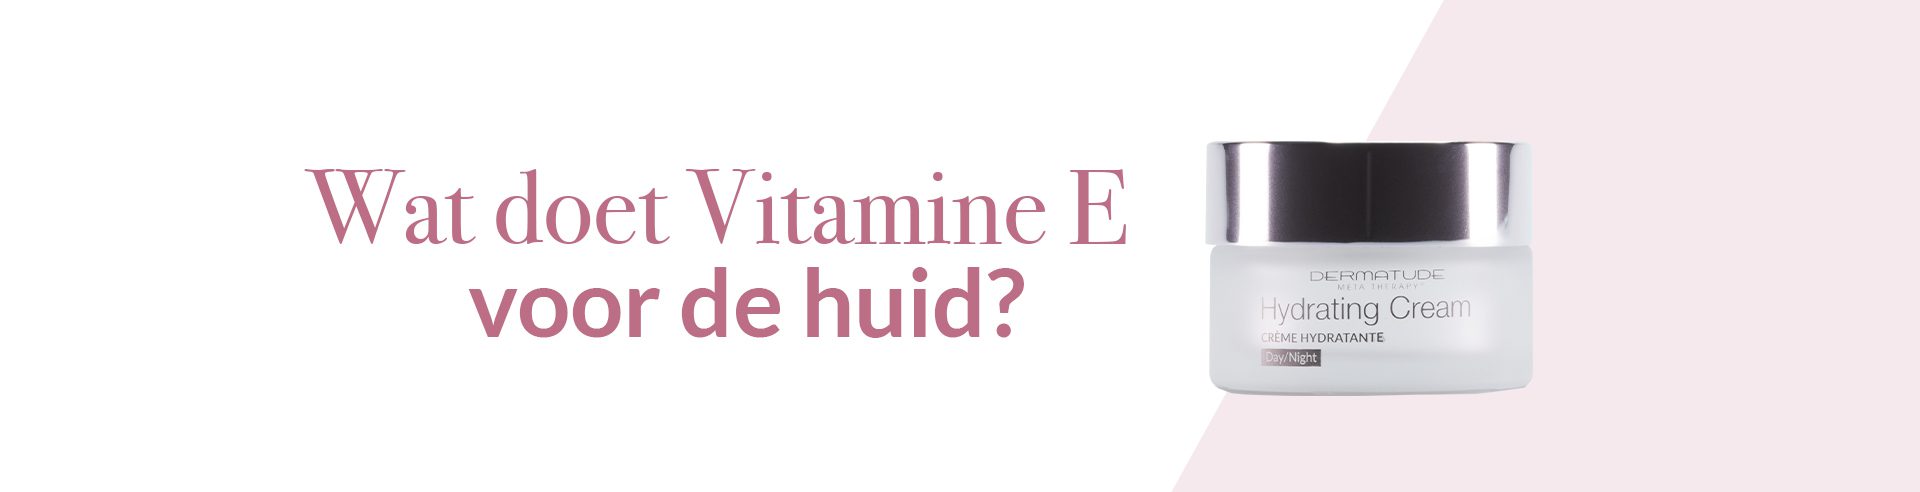 Vitamine E voor huid hydrating crème